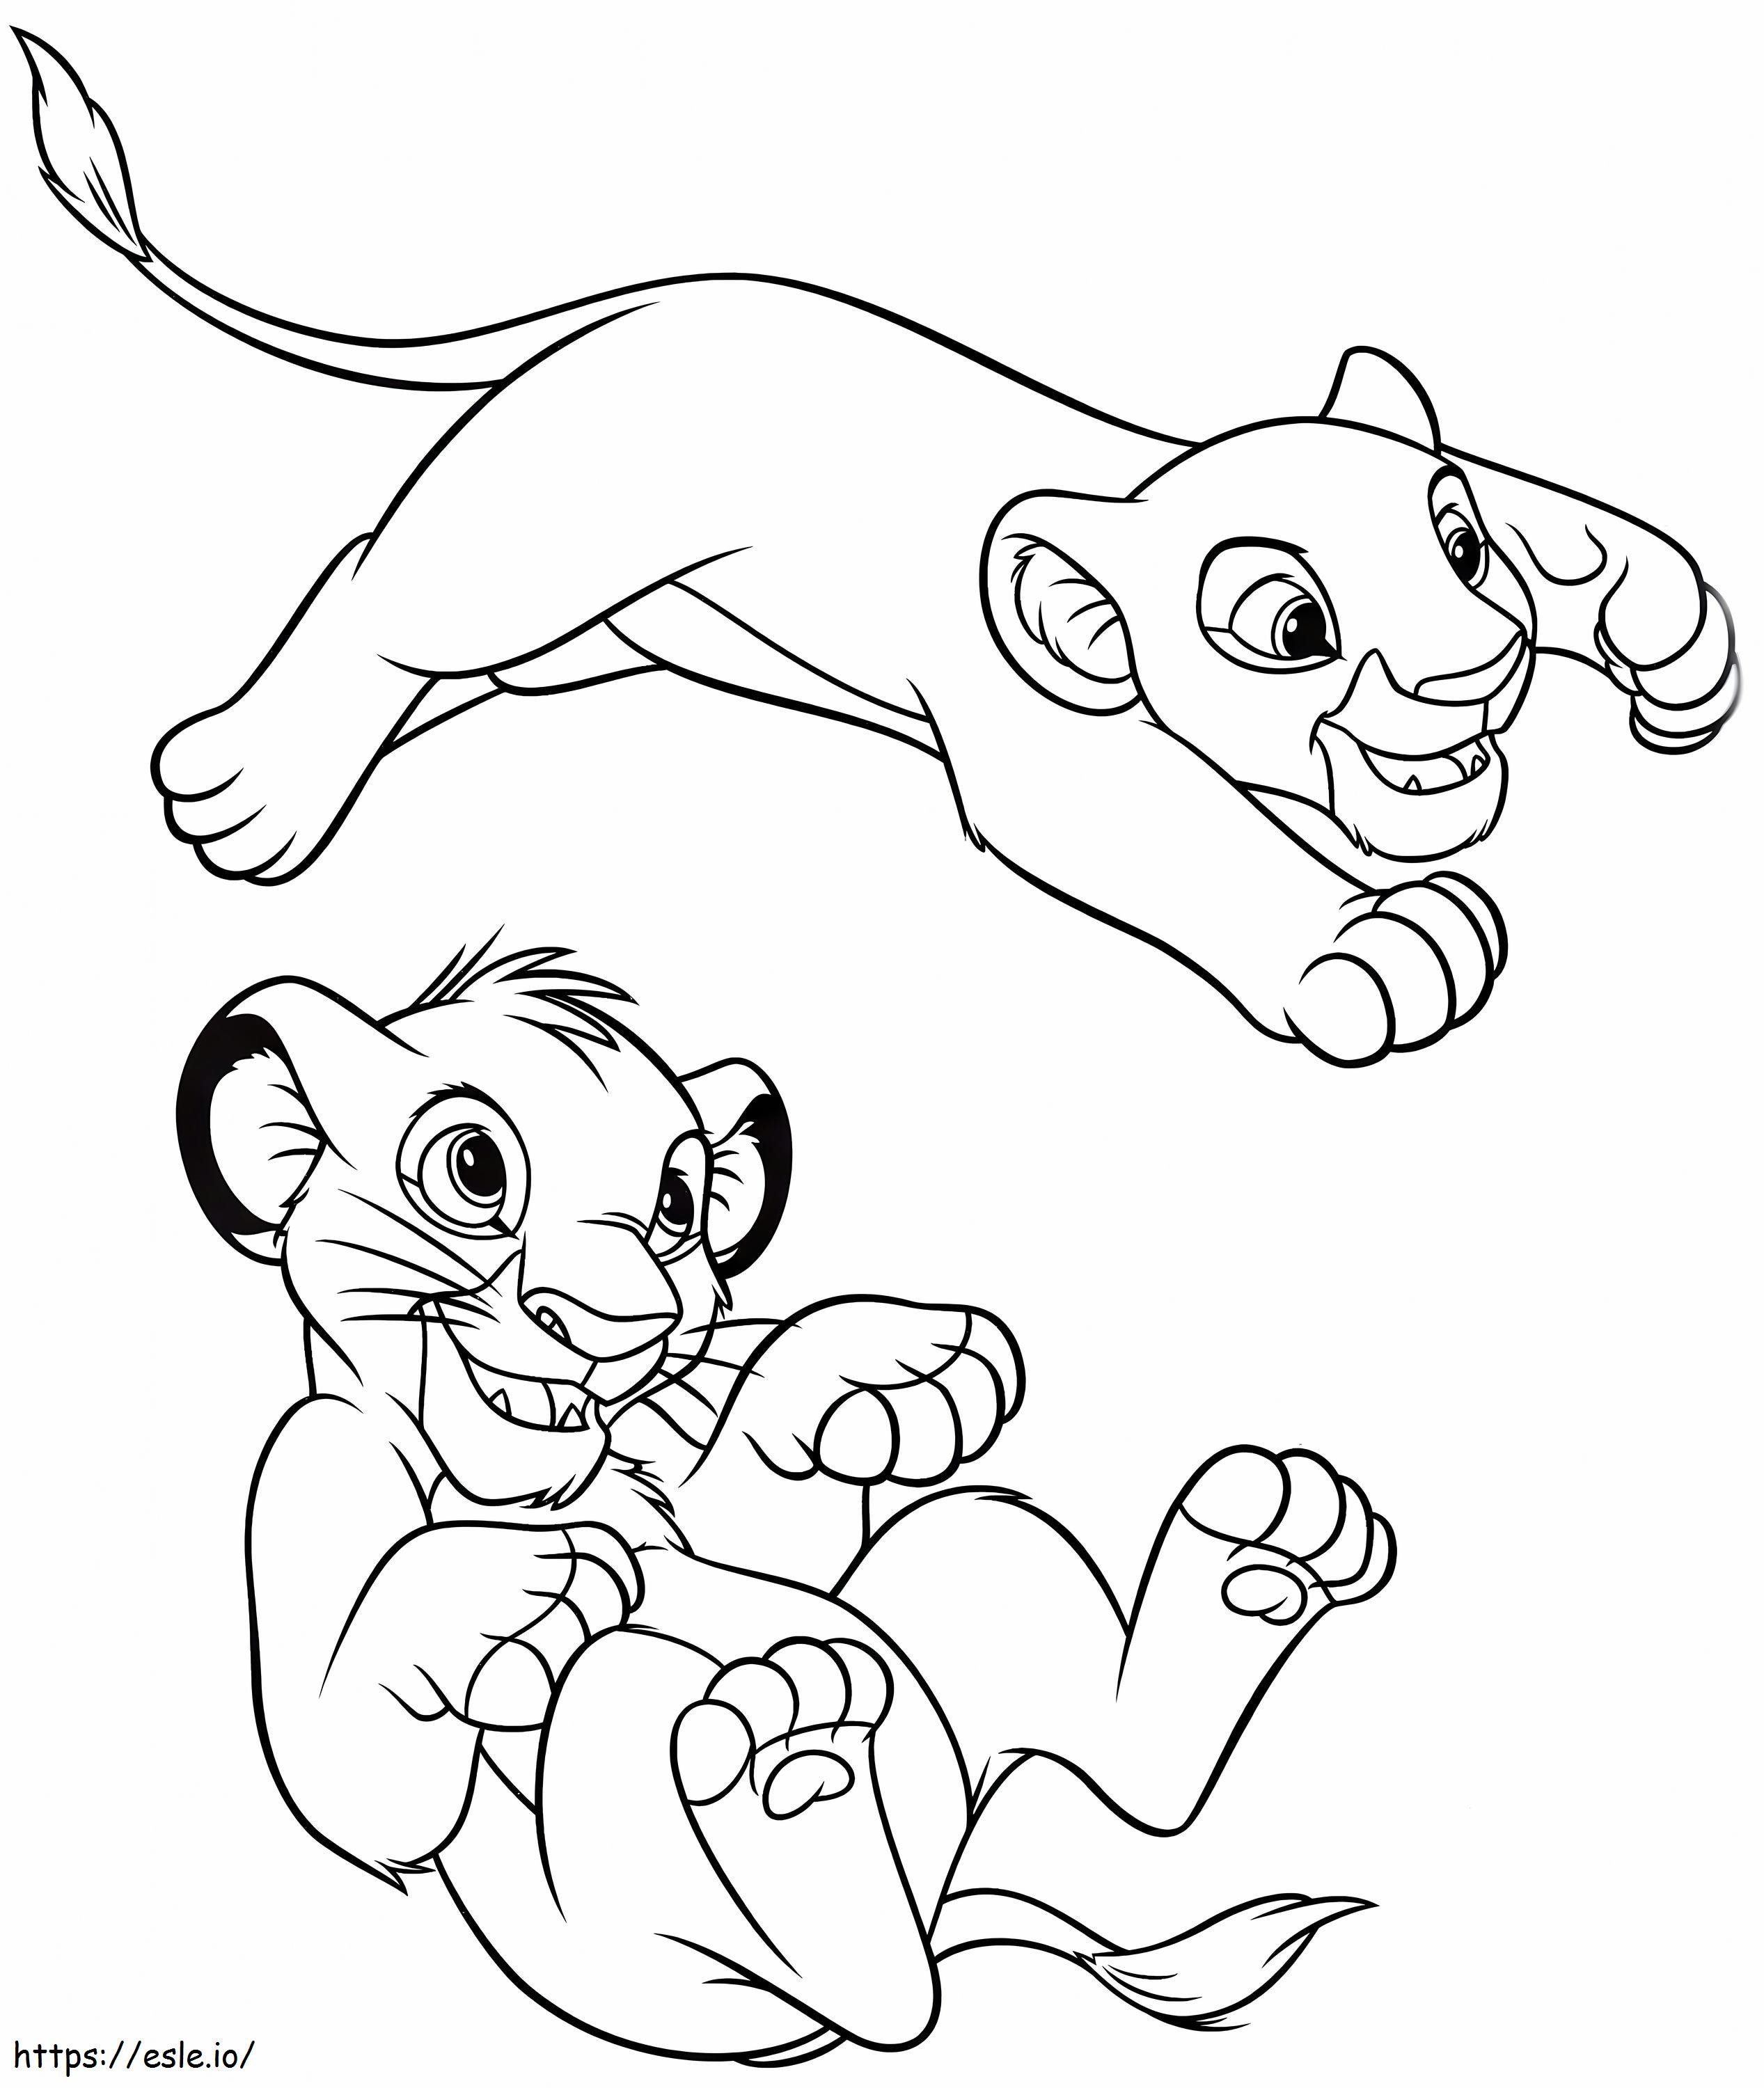 Leeuwenkoning Nala en Simba kleurplaat kleurplaat